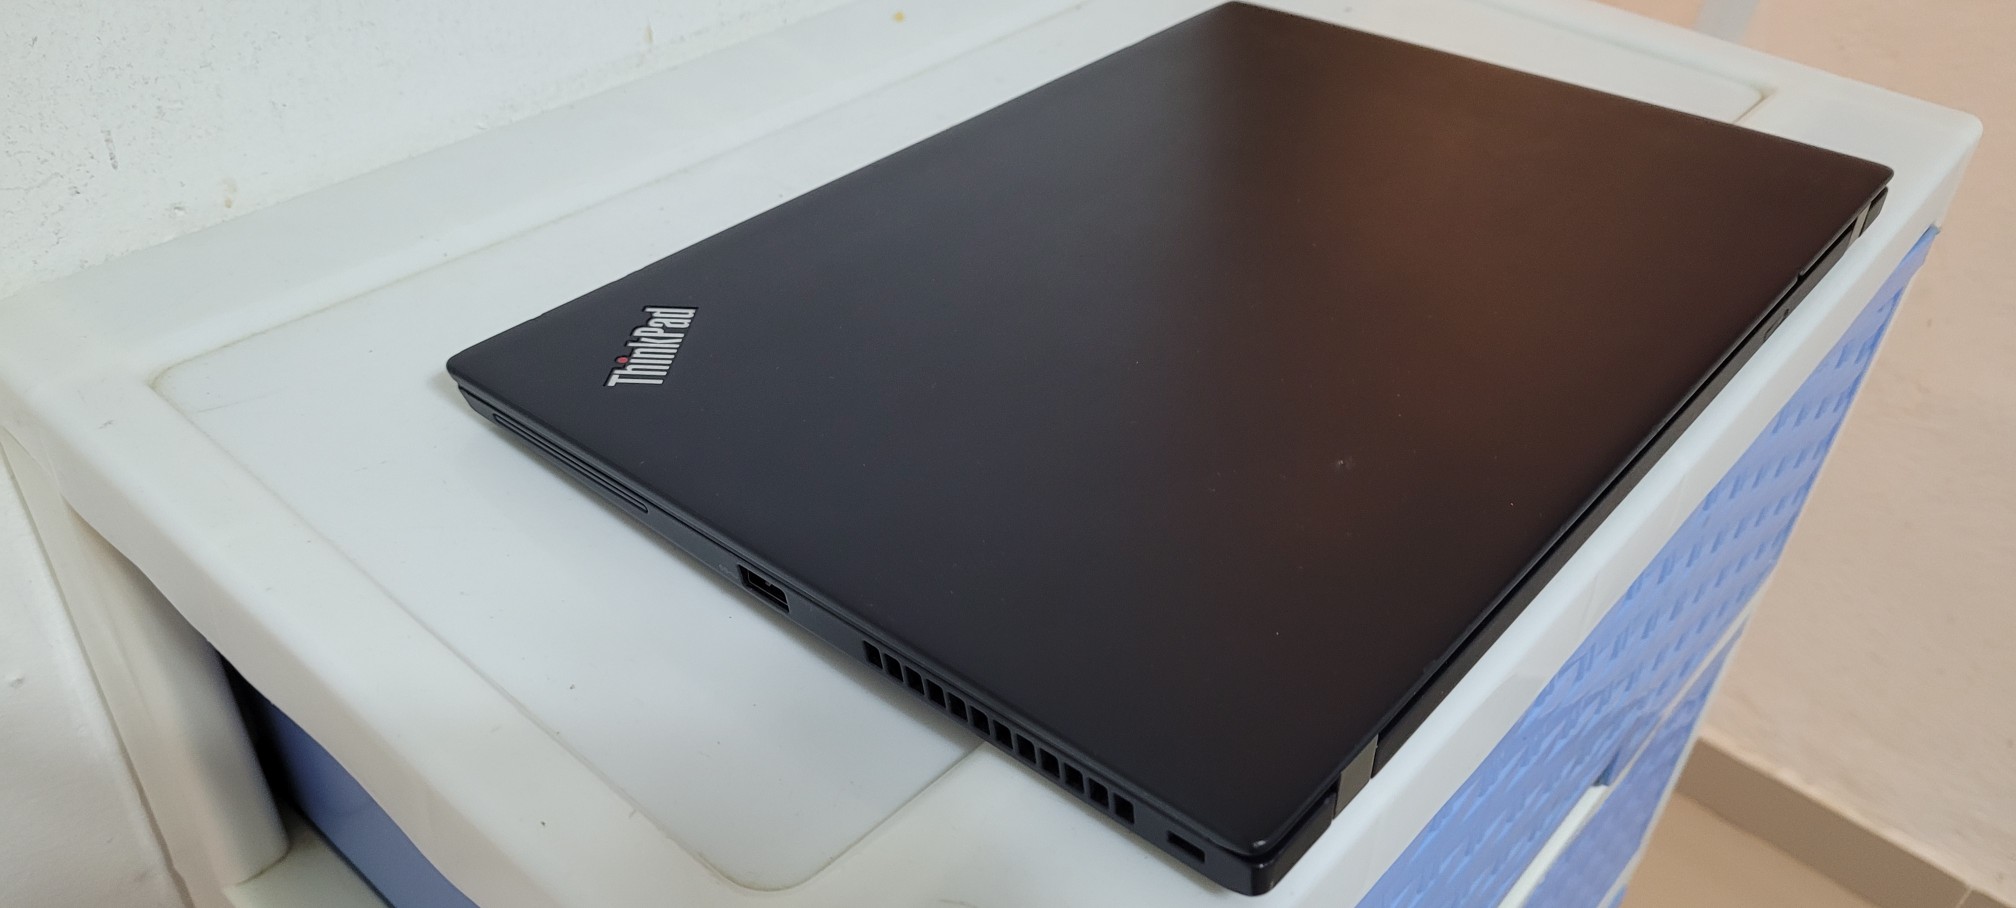 computadoras y laptops - Dell Slim t480 14 Pulg Core i5 8va Gen Ram 8gb Disco 256gb SSD hdmi 2